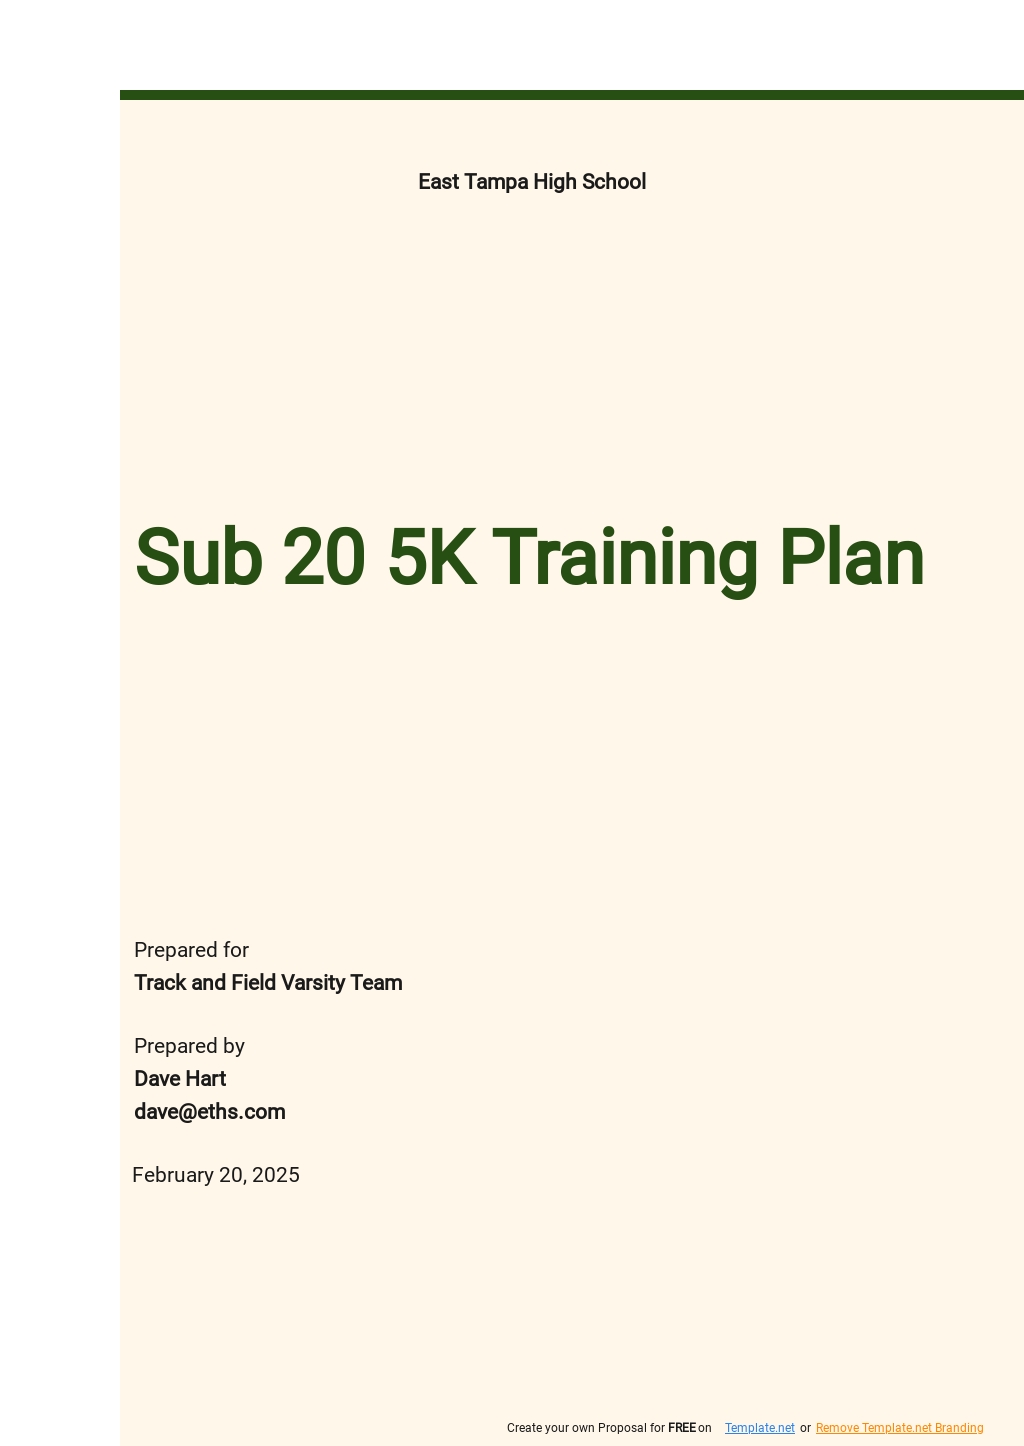 Sub 20 5k Training Plan Template